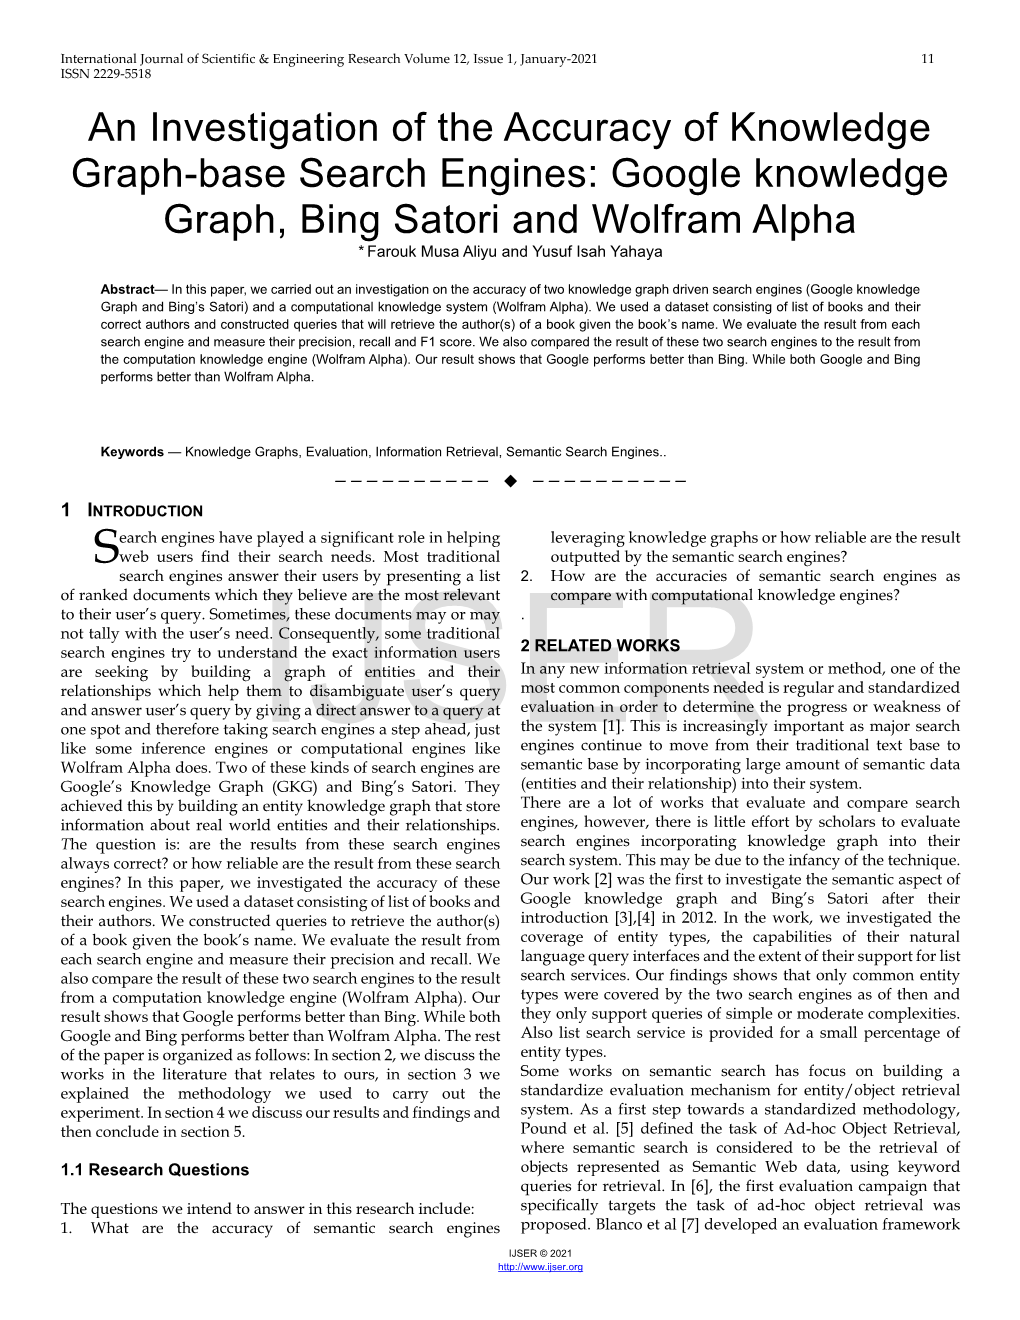 Google Knowledge Graph, Bing Satori and Wolfram Alpha * Farouk Musa Aliyu and Yusuf Isah Yahaya